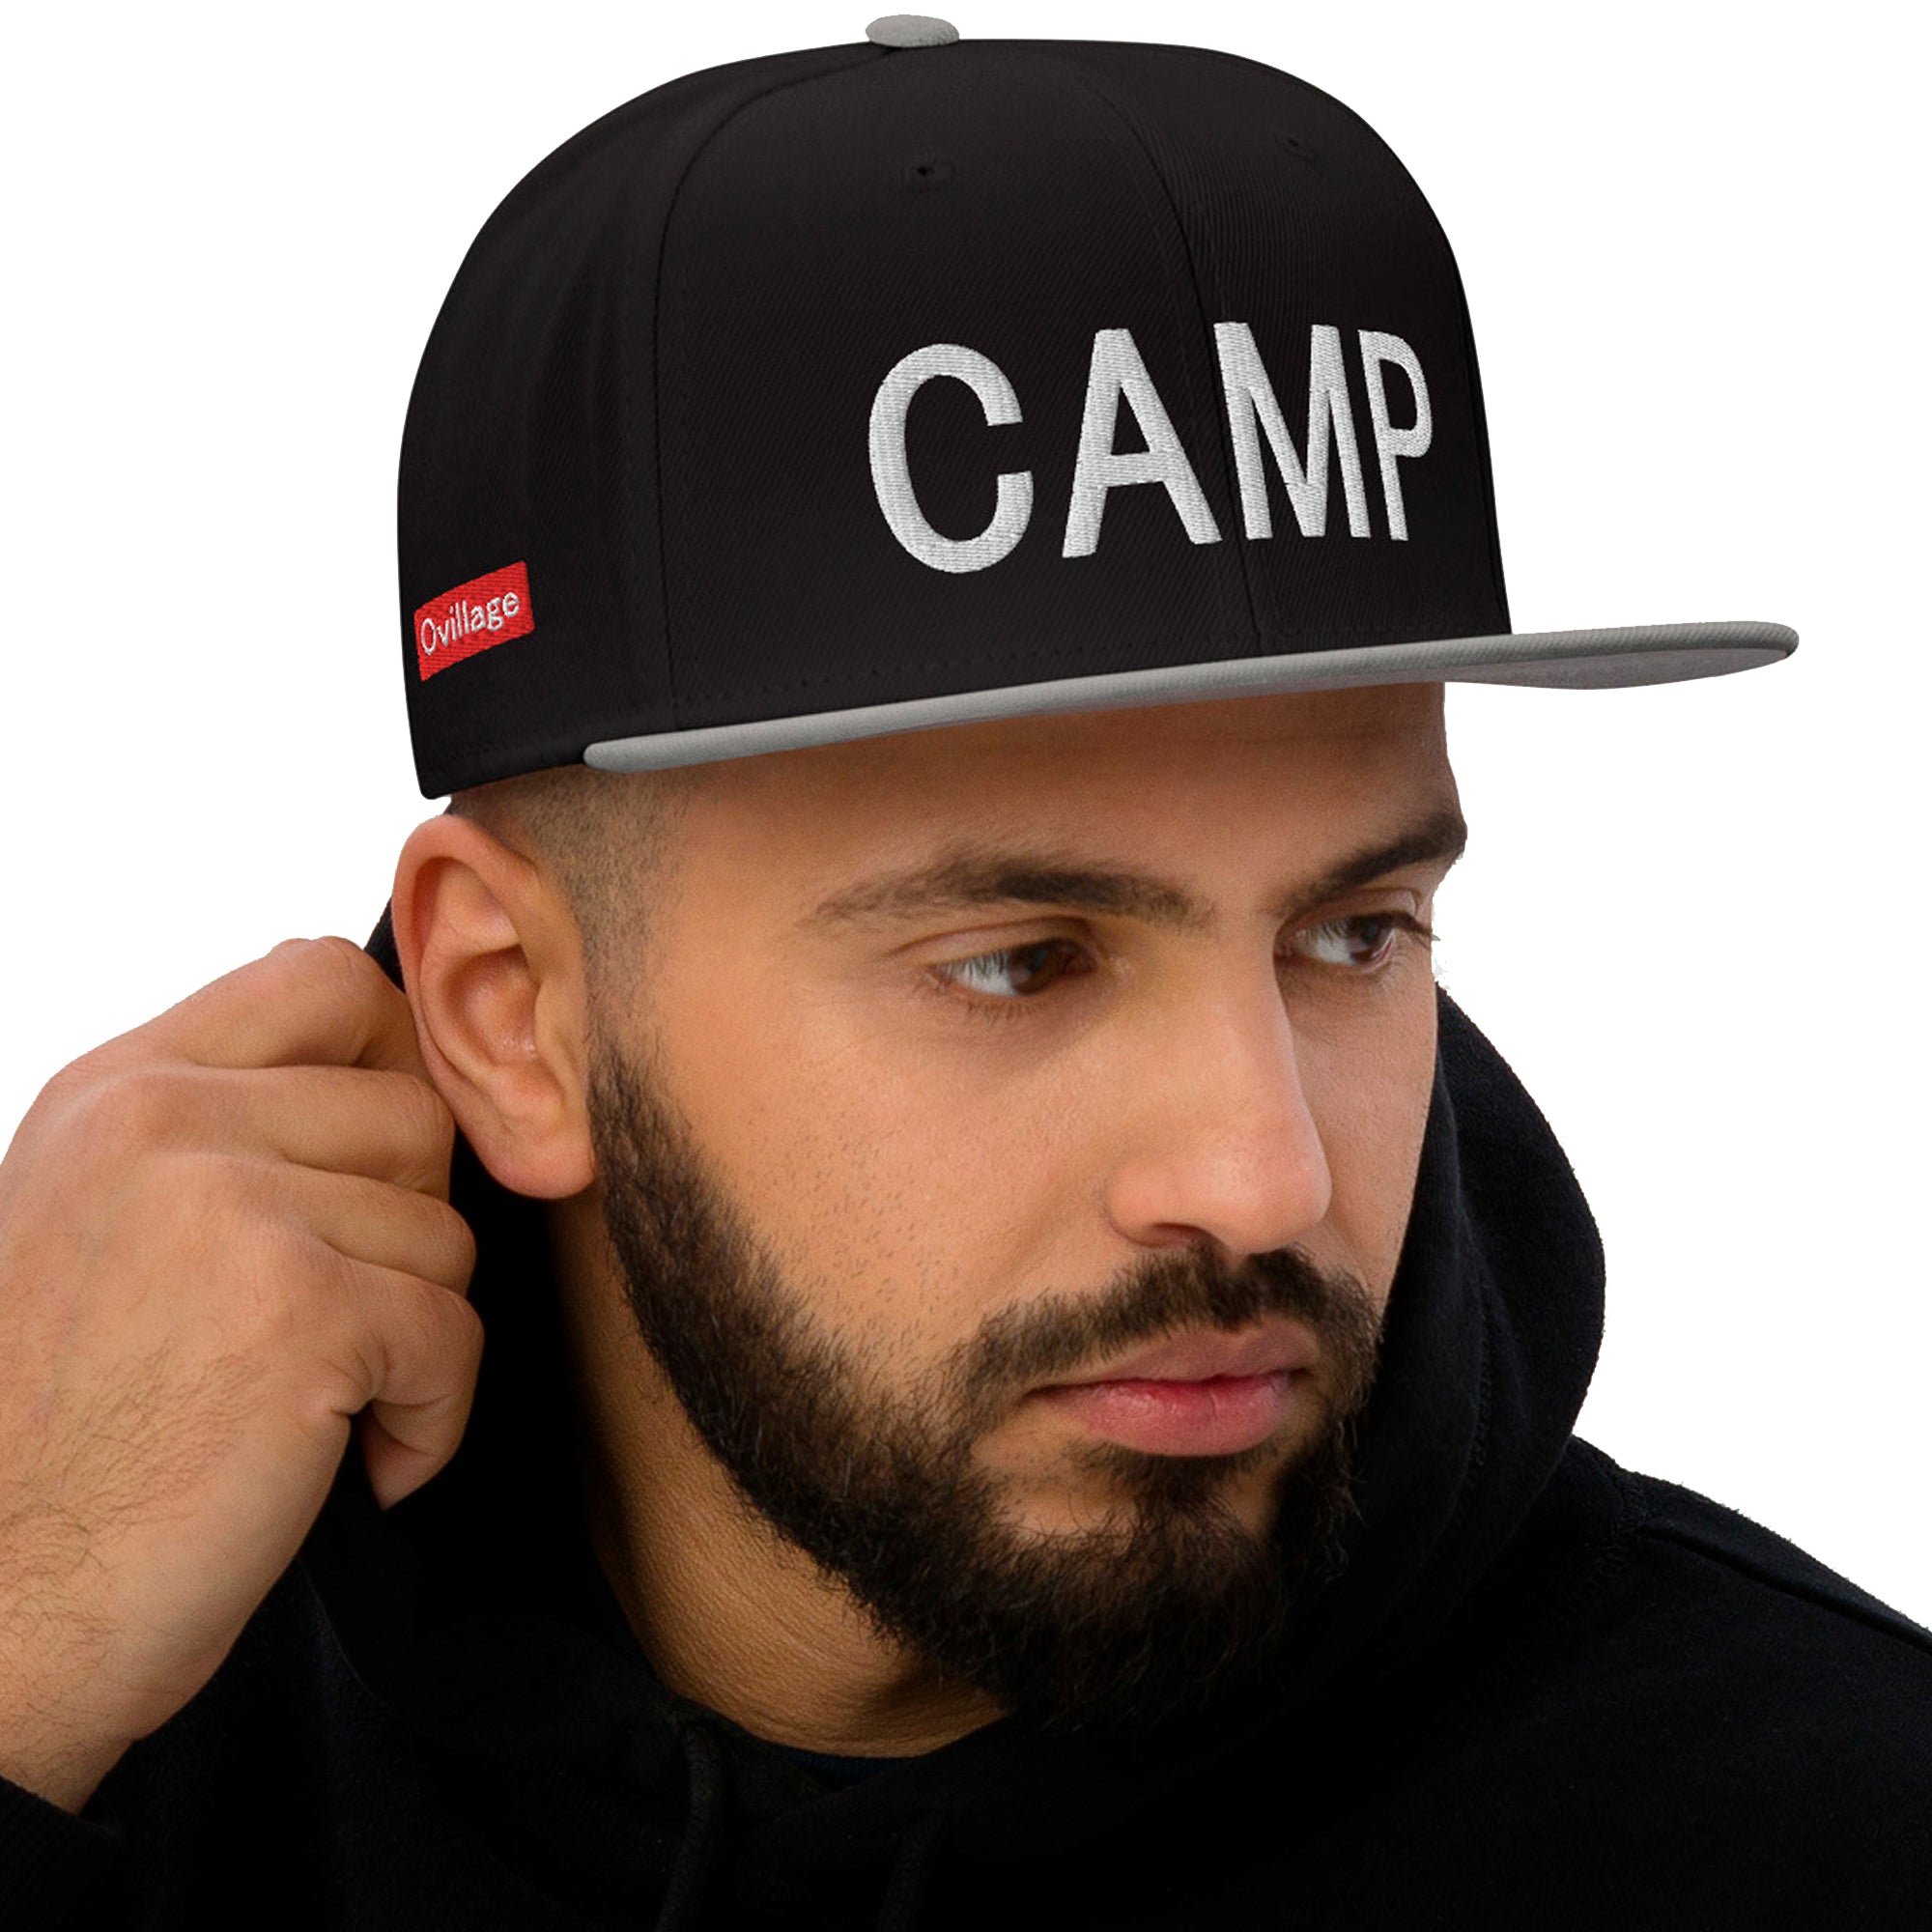 Snapback Cap [CAMP] Gray / Black / Black 3D Embroidery